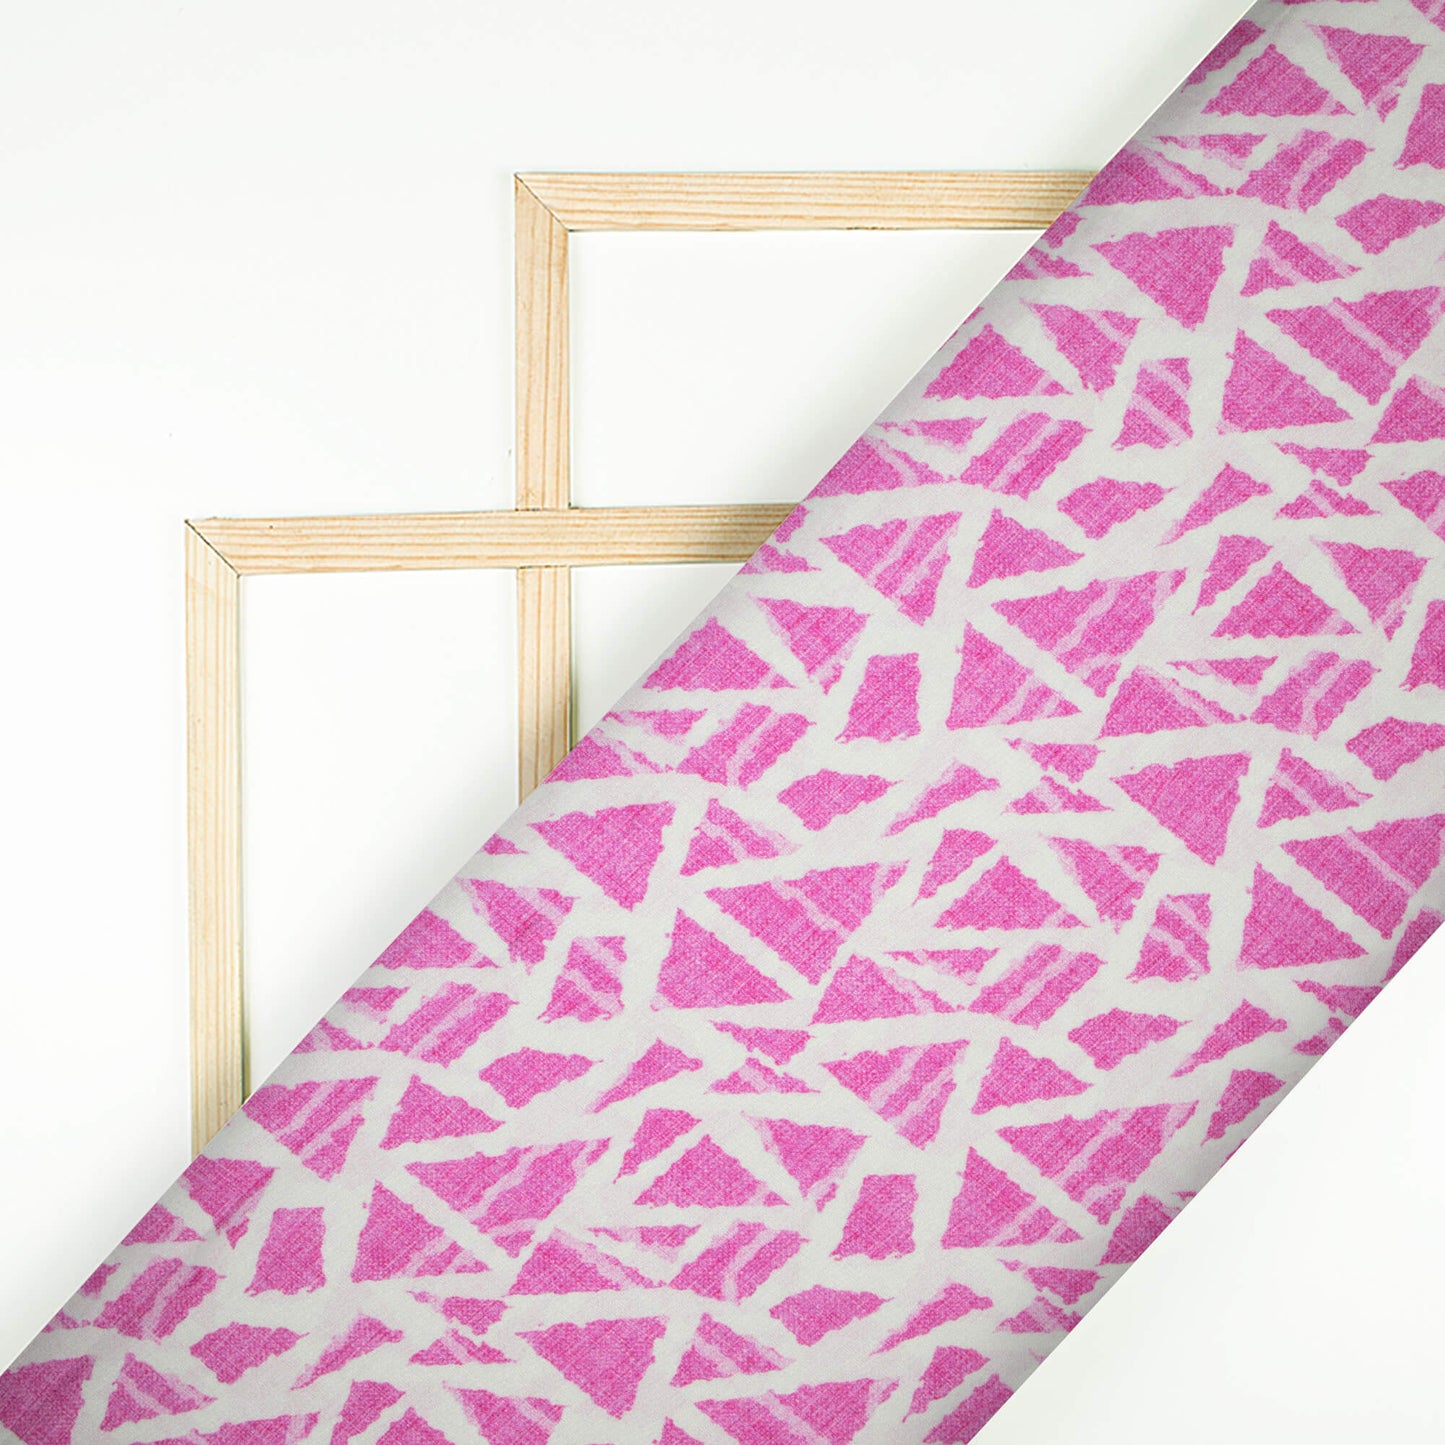 Persian Pink And White Geometric Pattern Digital Print Premium Lush Satin Fabric